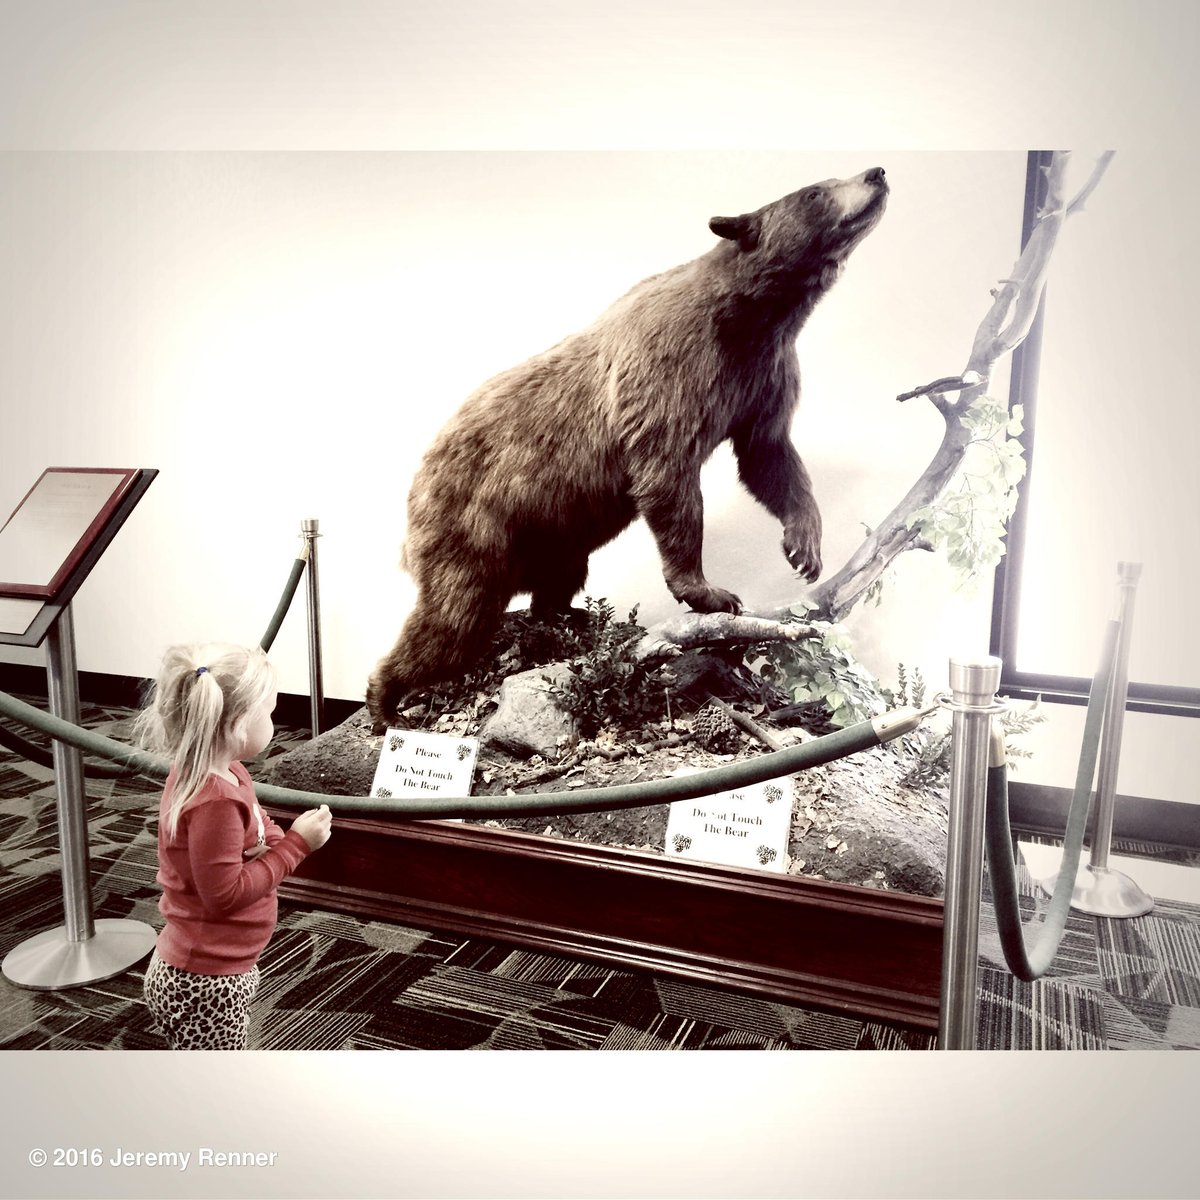 Revisiting our favorite bear! #camprenner #pineconehunt #lovethistime https://t.co/ZIYnVUiuQ2